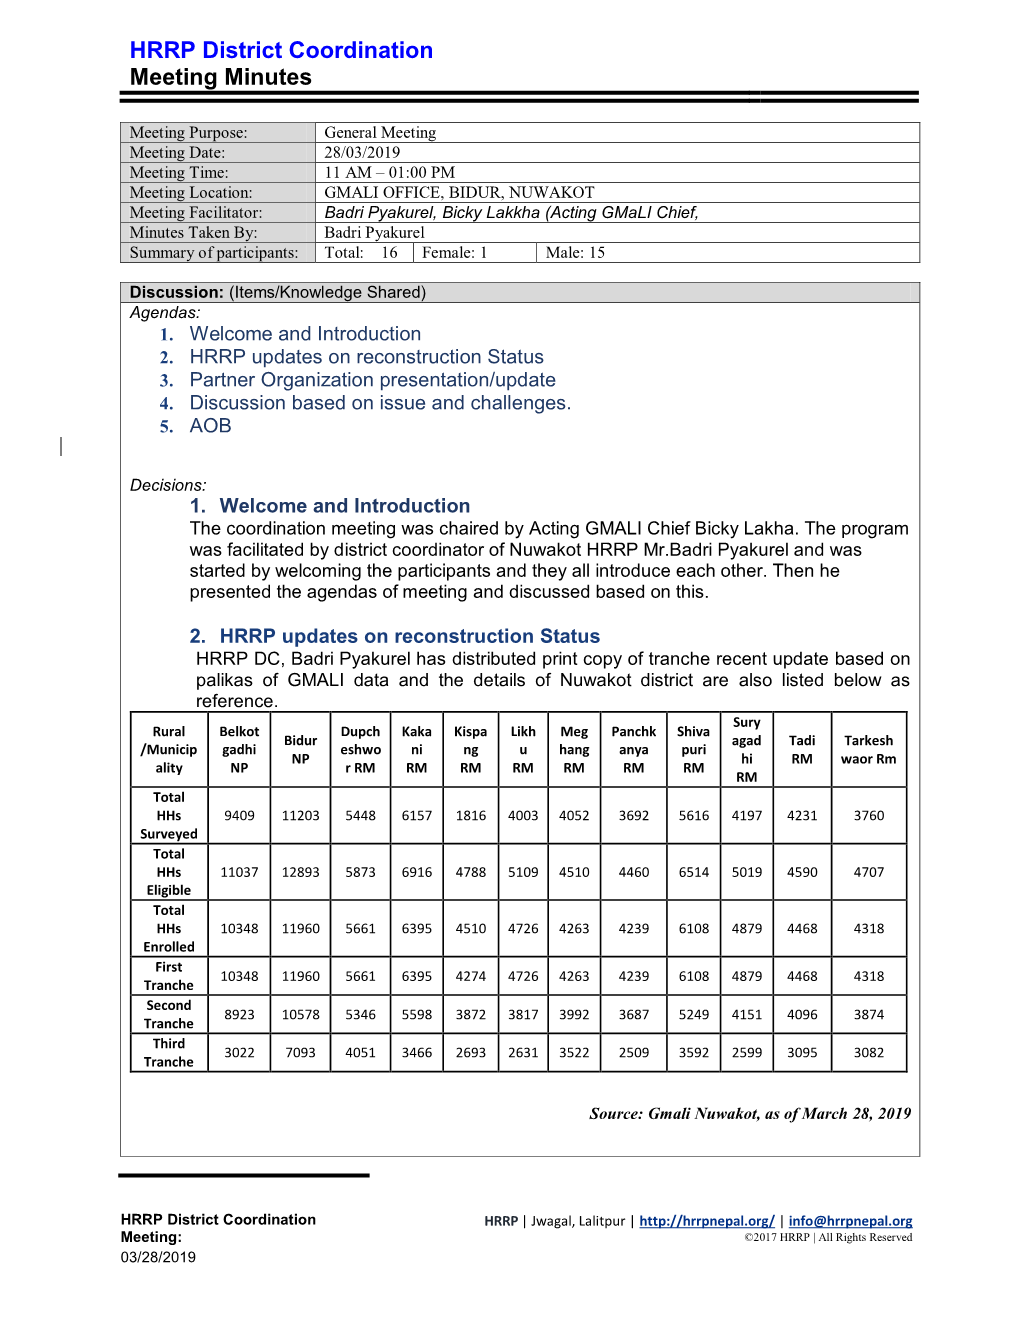 HRRP-Nuwakot Coordination Meeting Minutes-280319